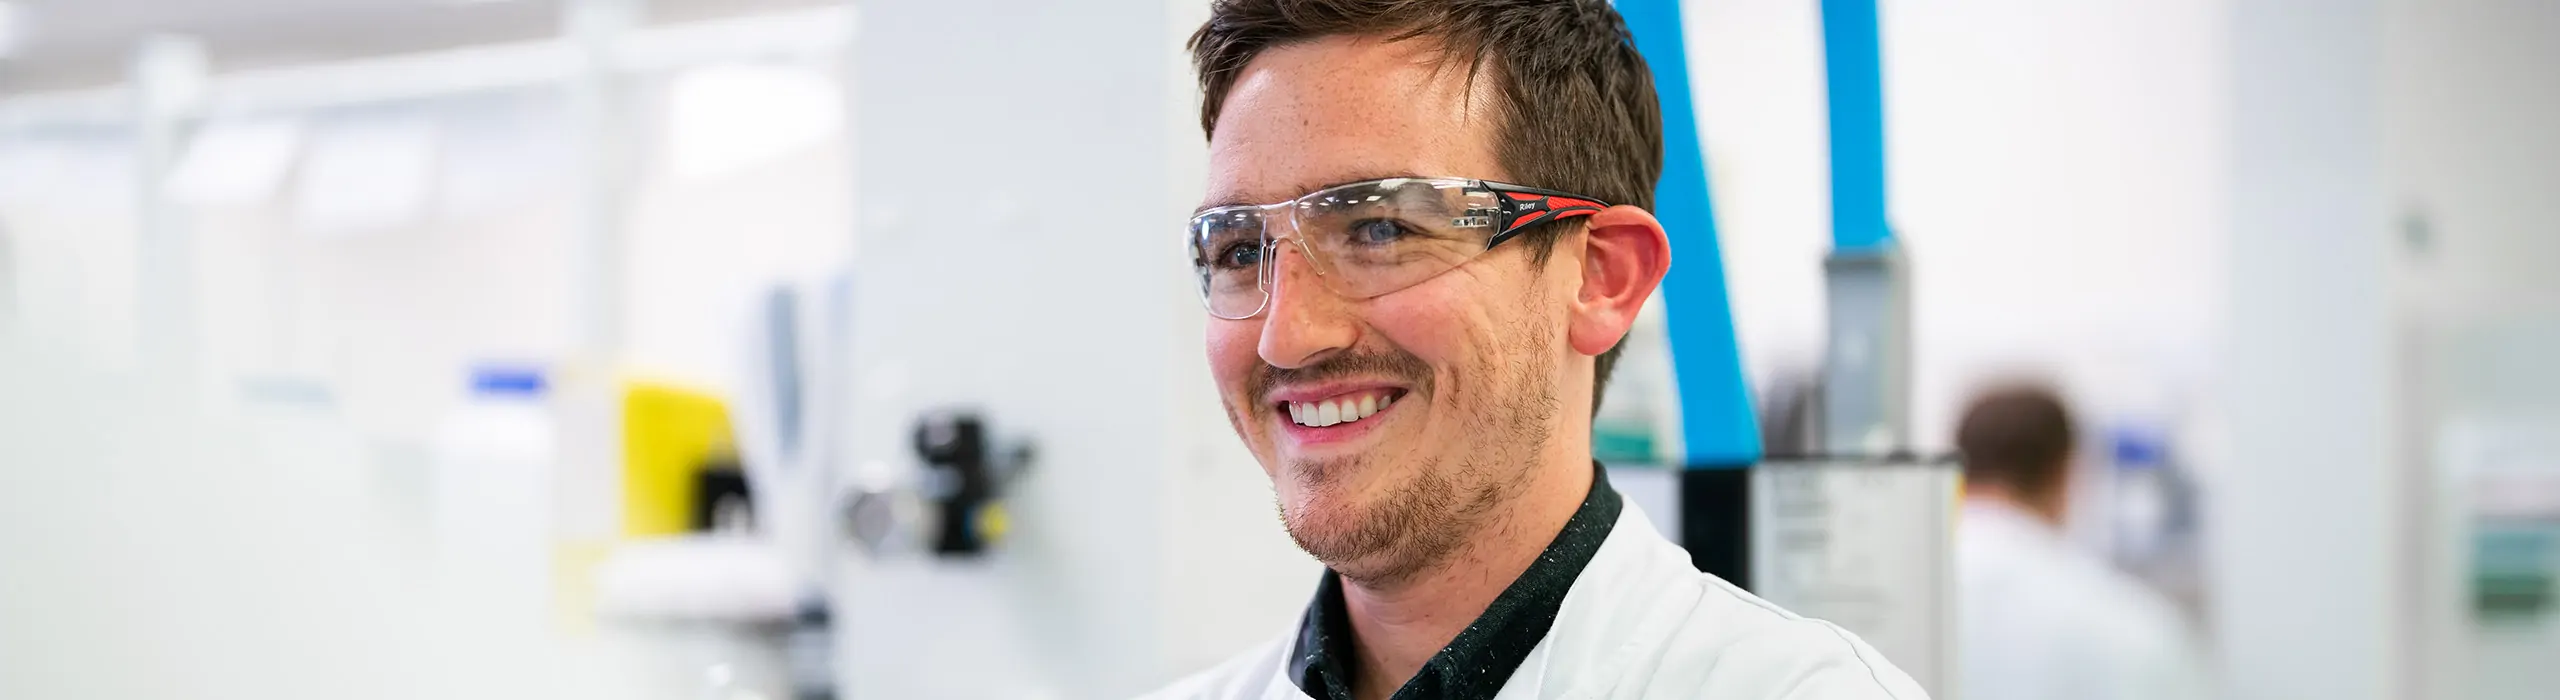 male technician smiling in lab